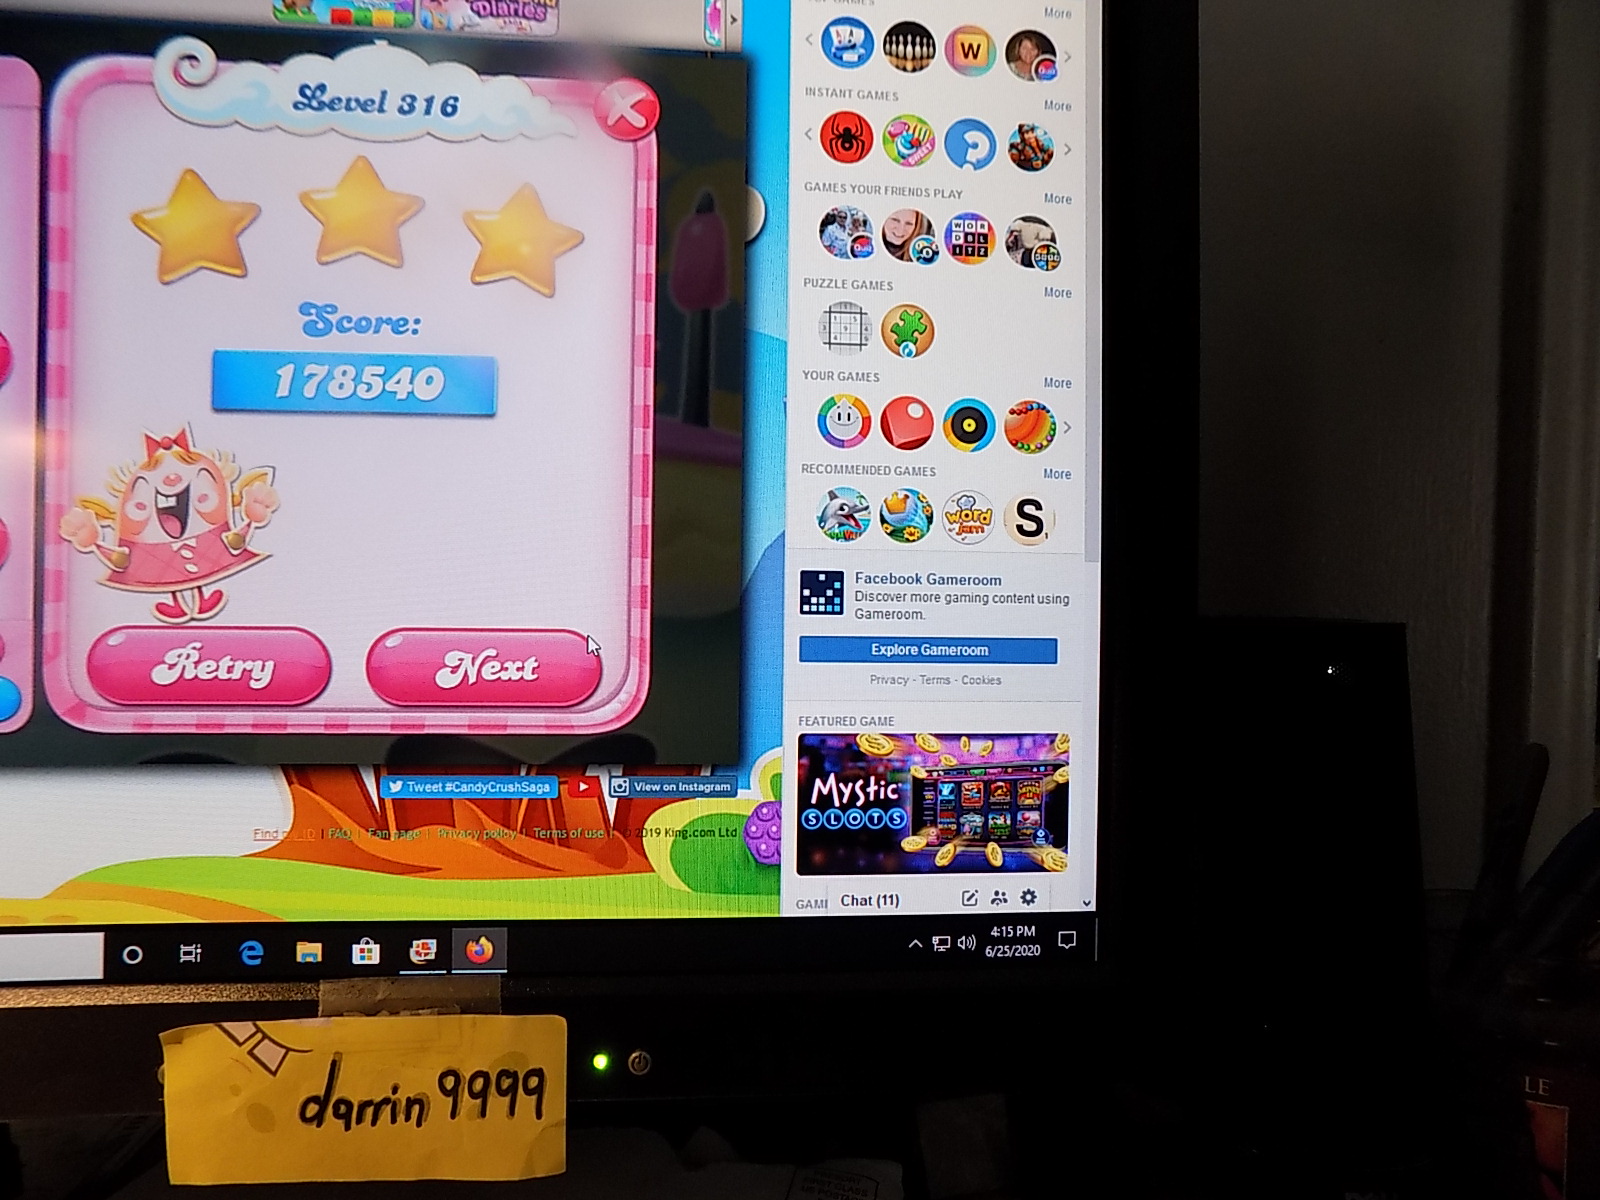 Candy Crush Saga: Level 316 178,540 points